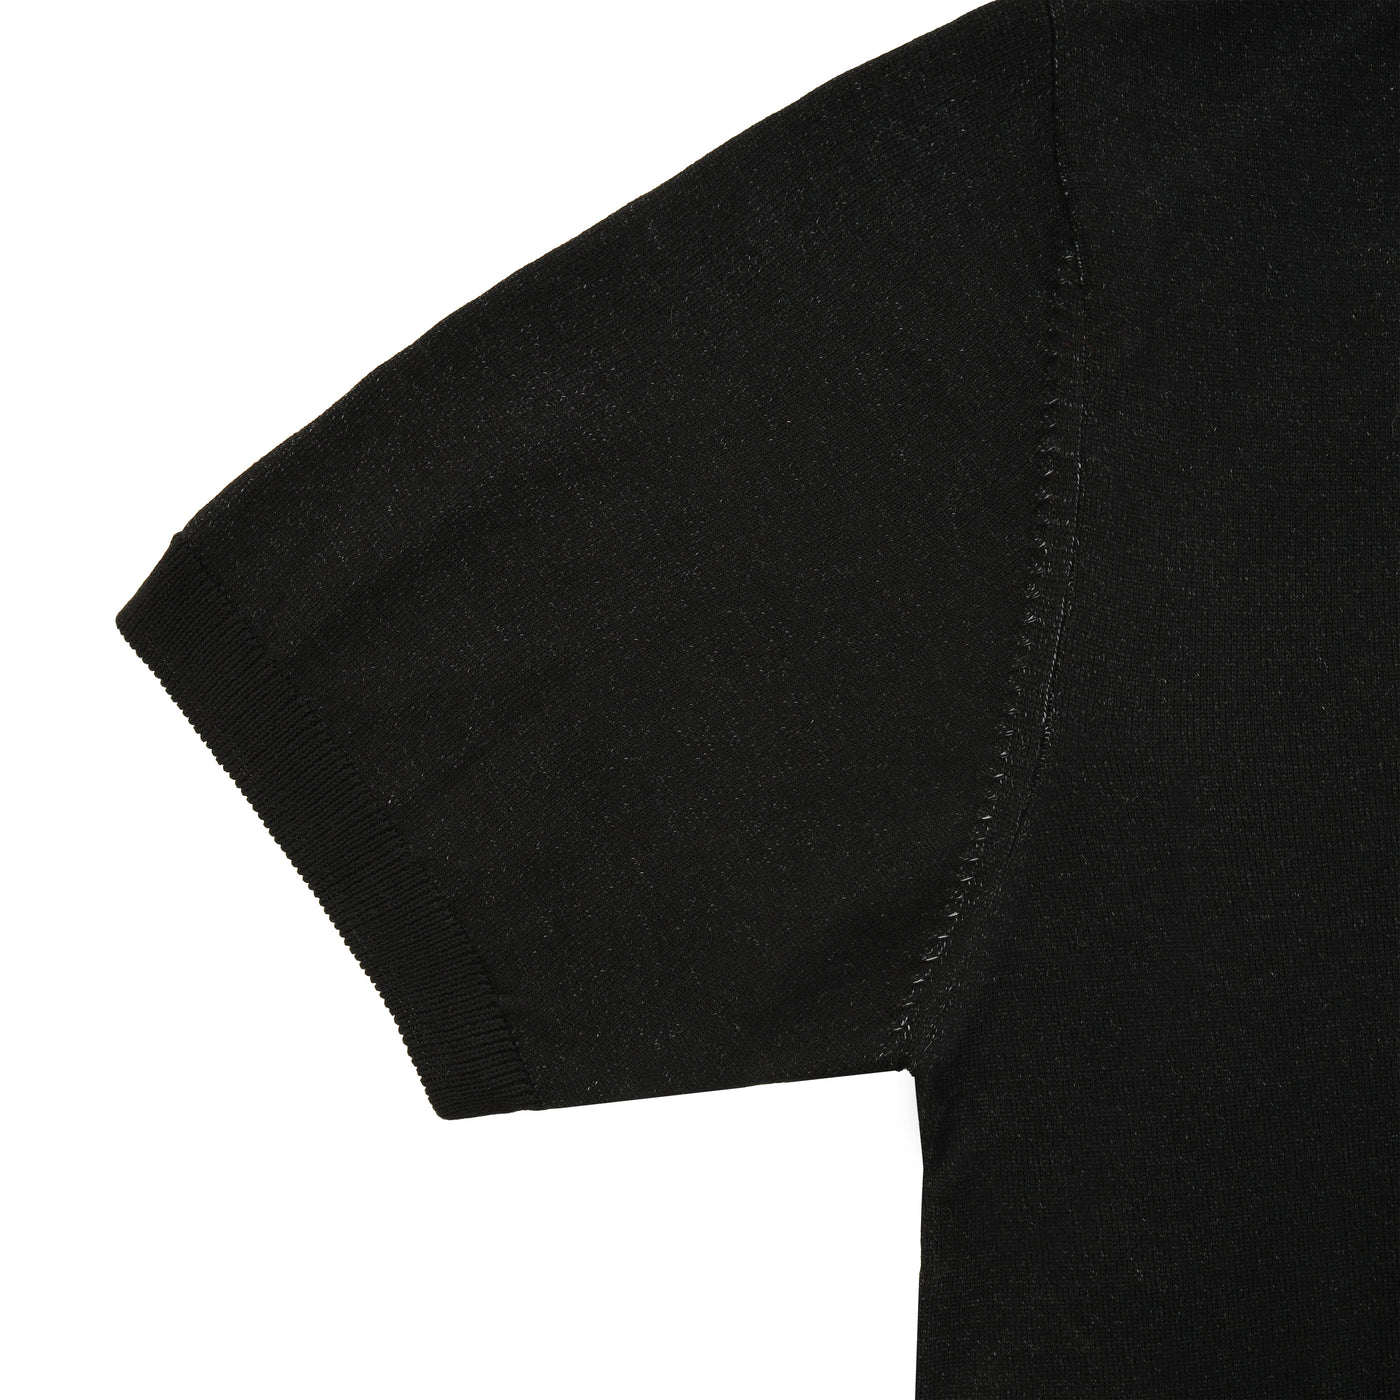 Plain Black  Knitted  Round T Shirt